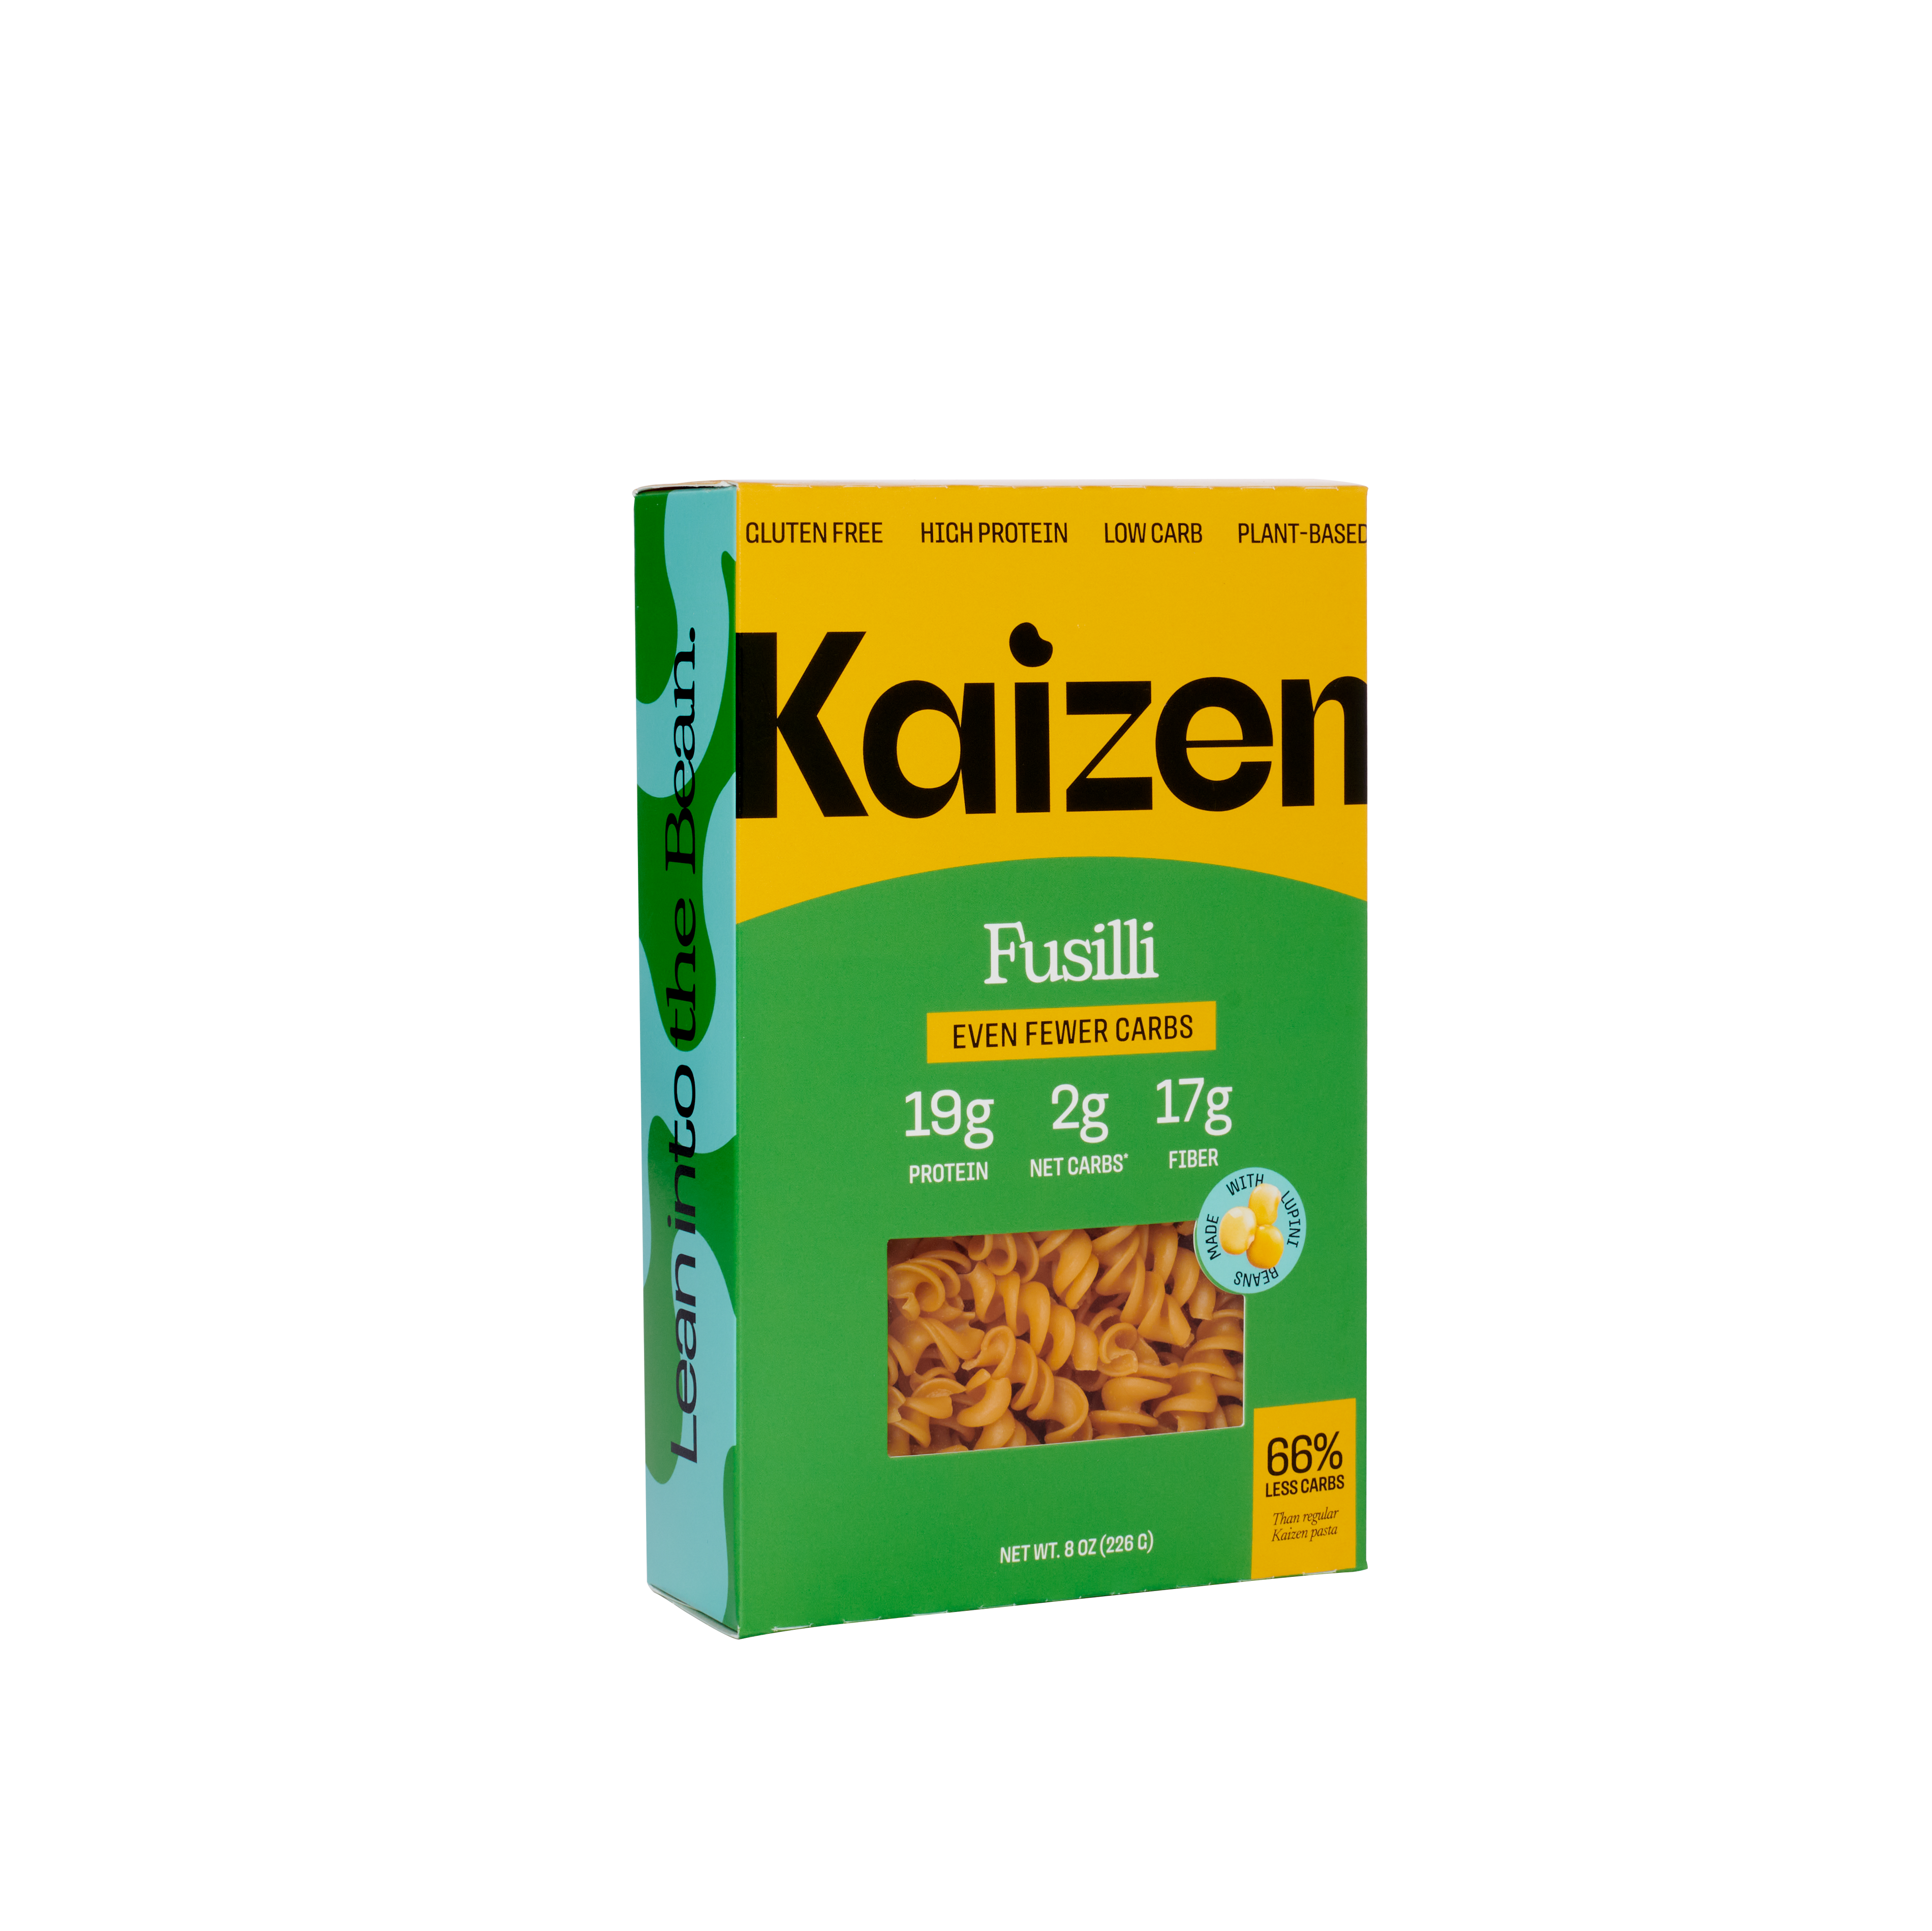 Kaizen Pasta - Fusilli - 2 NET 22 units per case 8.0 oz